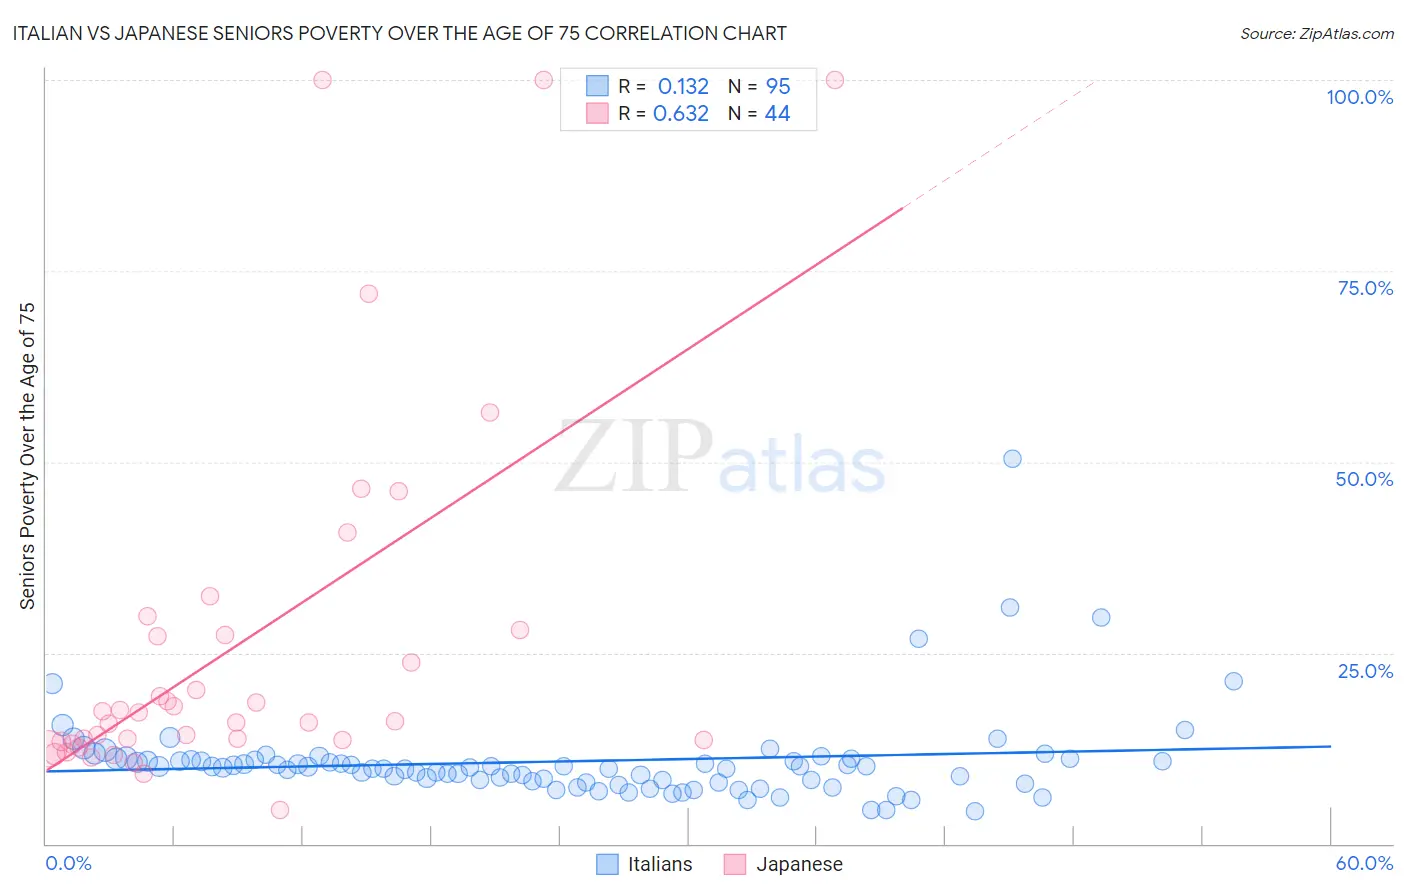 Italian vs Japanese Seniors Poverty Over the Age of 75